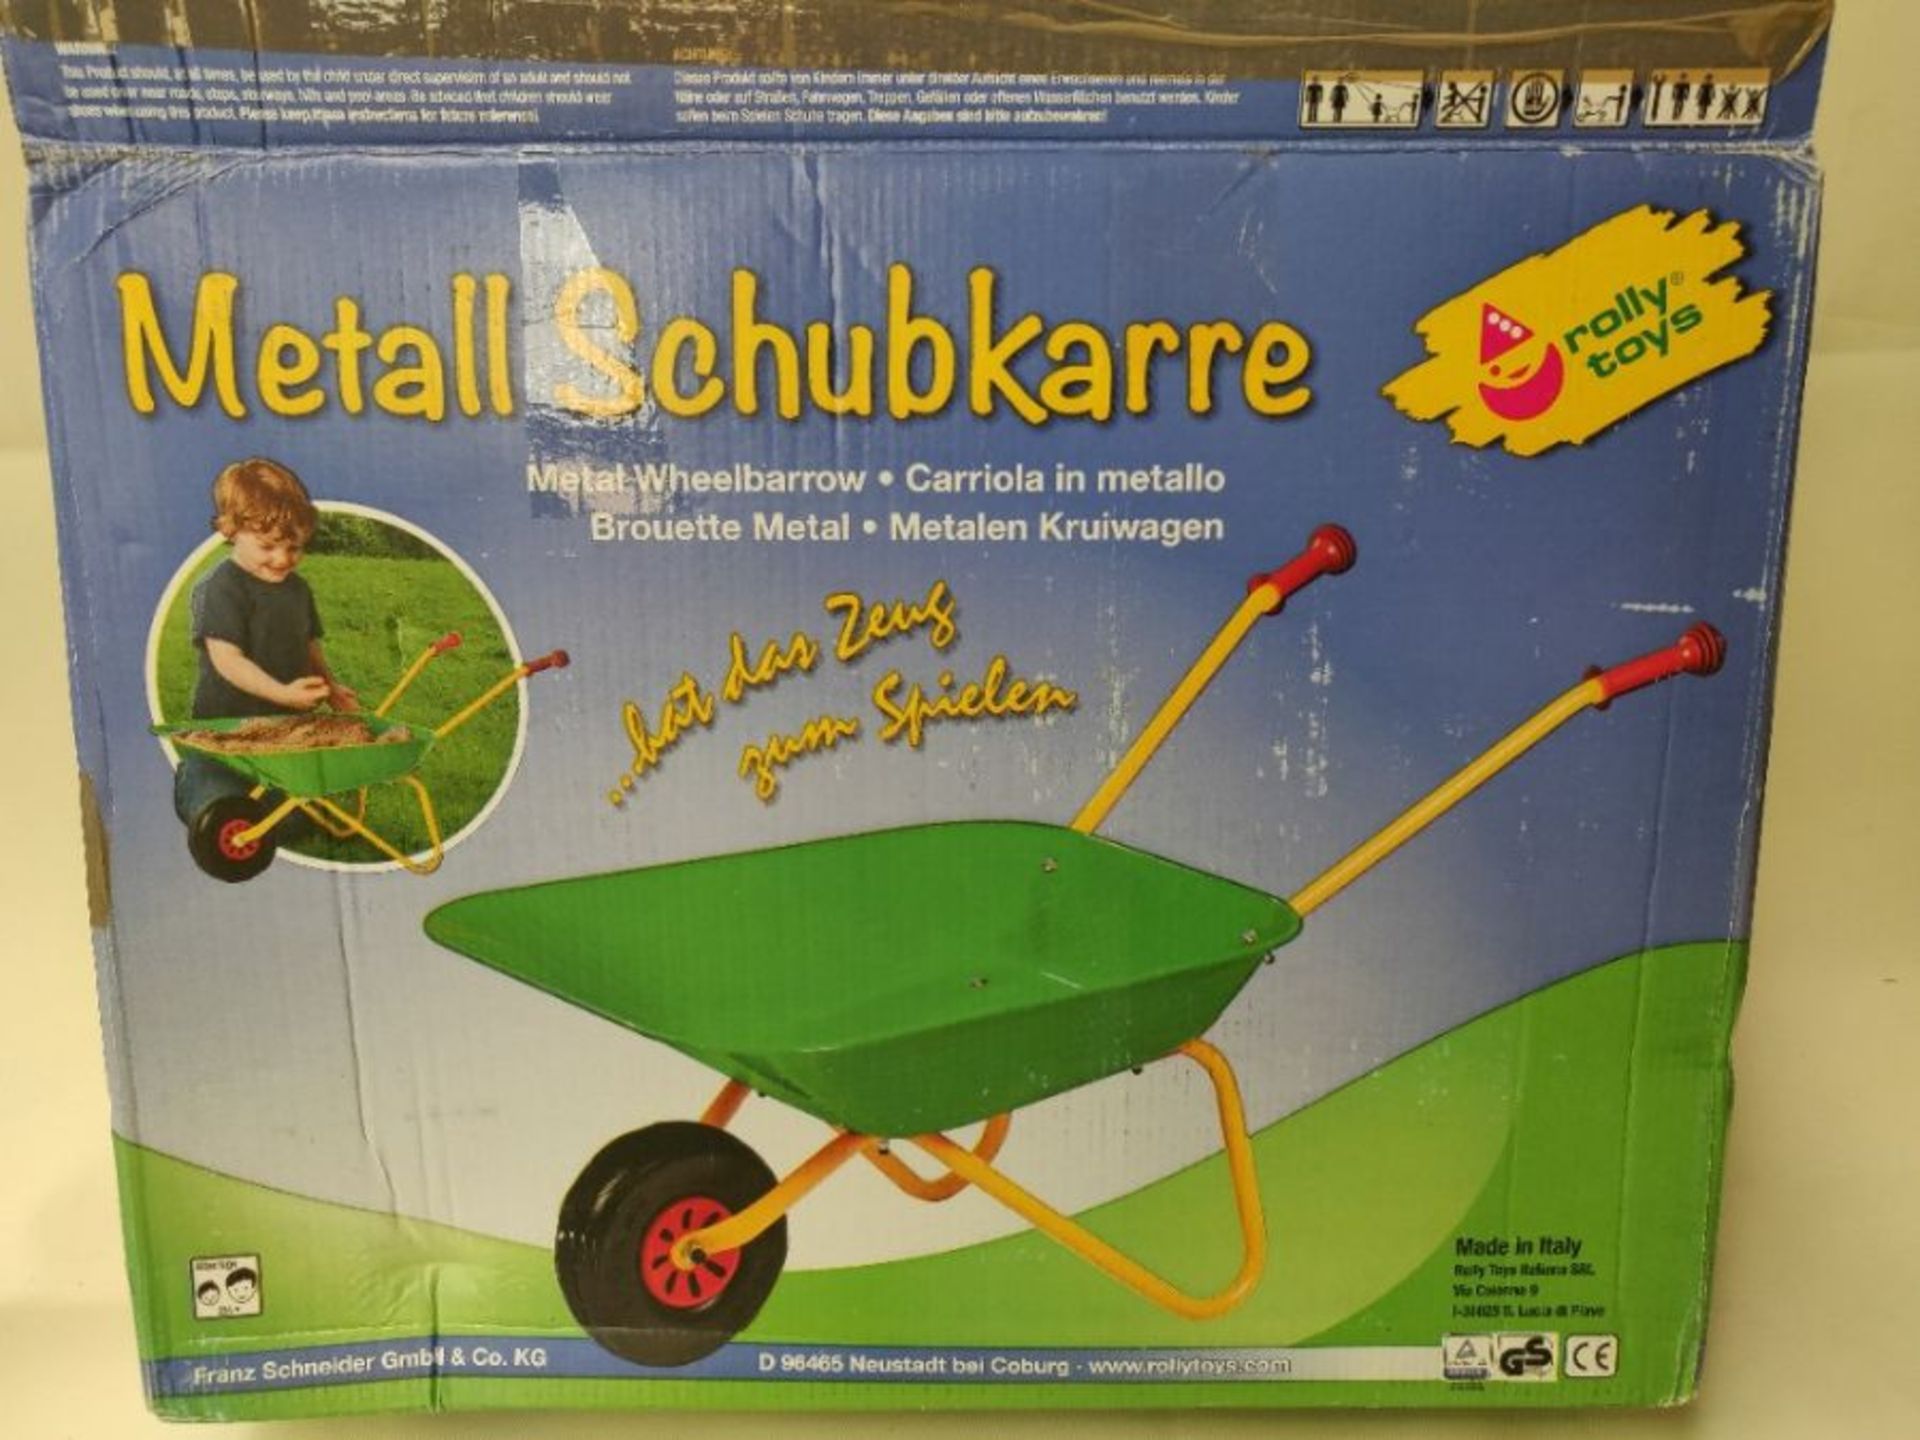 Rolly Toys 271801 Metal wheelbarrow (Green) - Image 2 of 3